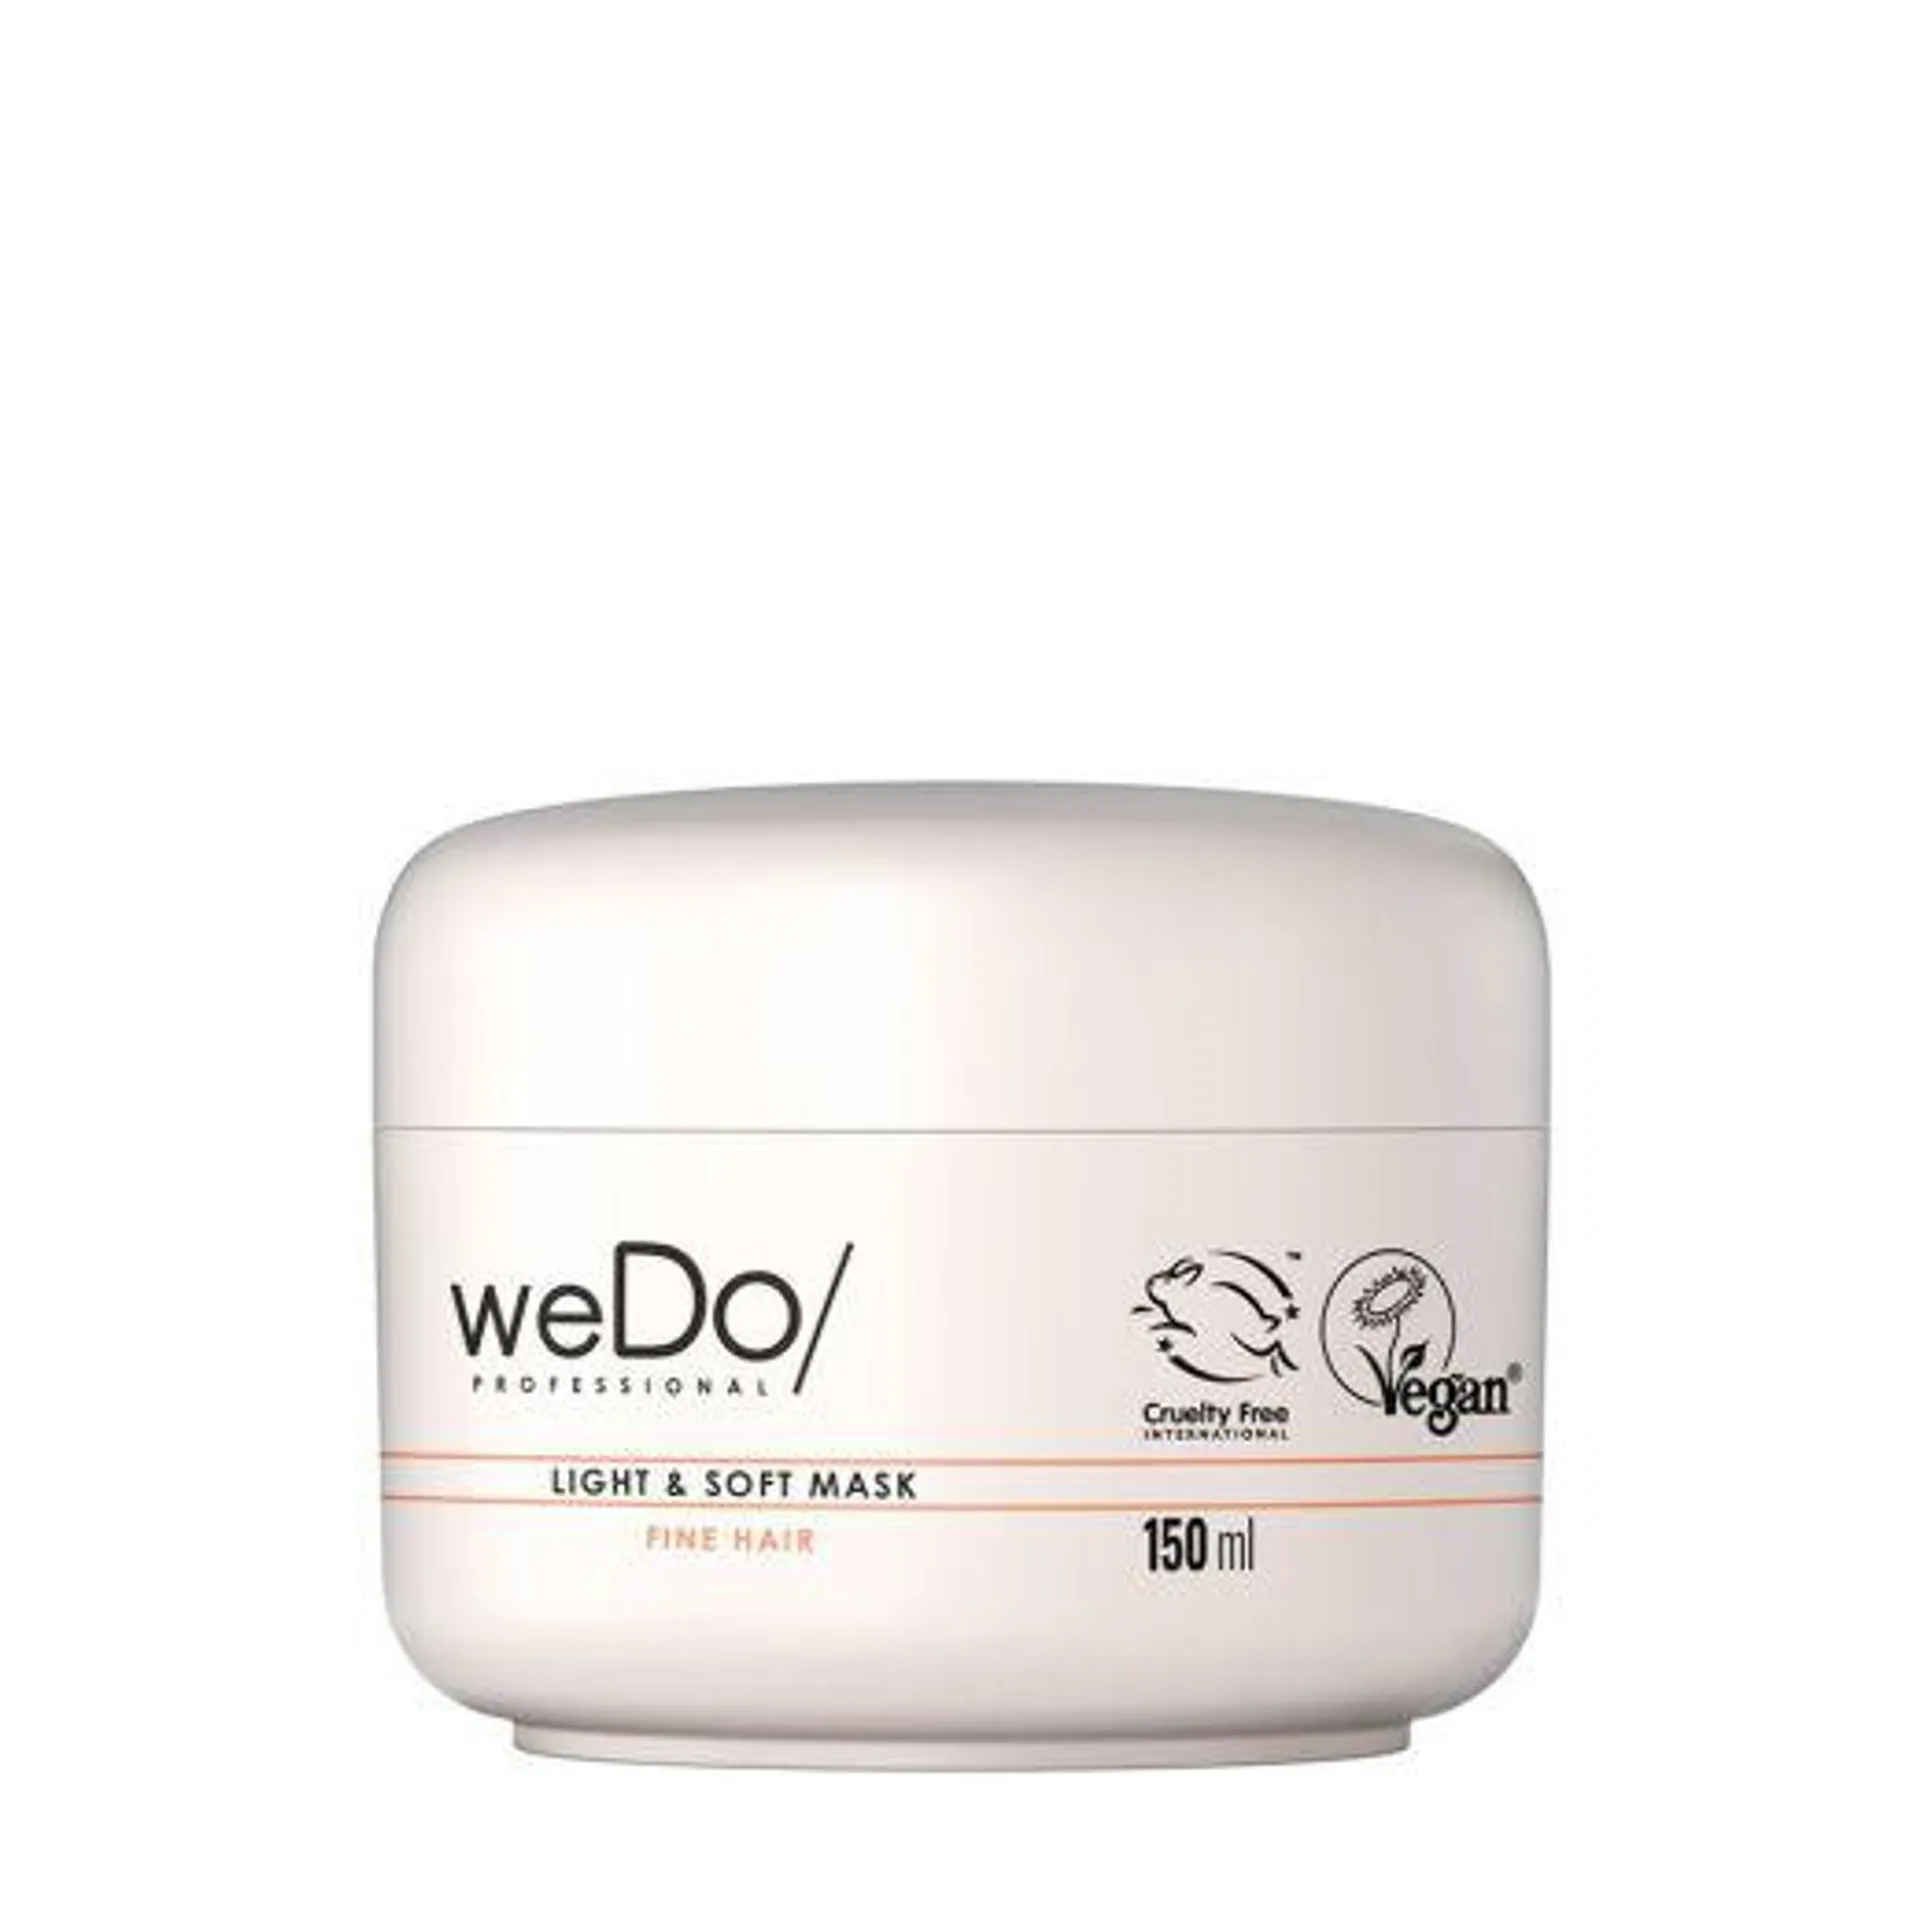 weDo Professional Light & Soft Mask 150ml